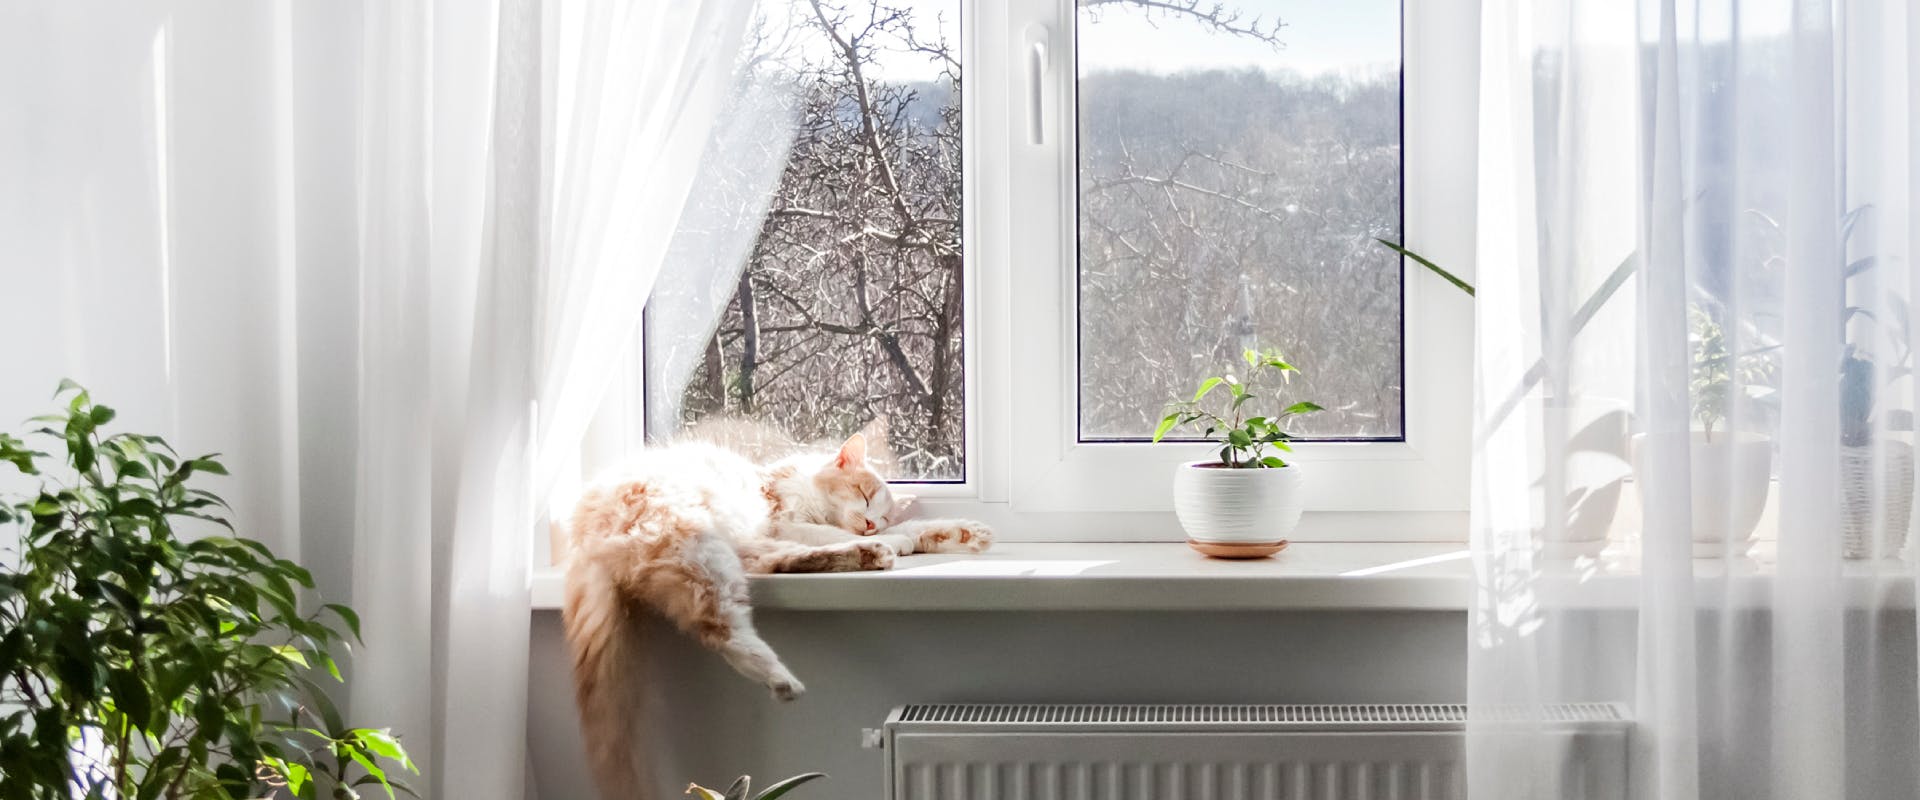 A cat sleeps on a window sill.